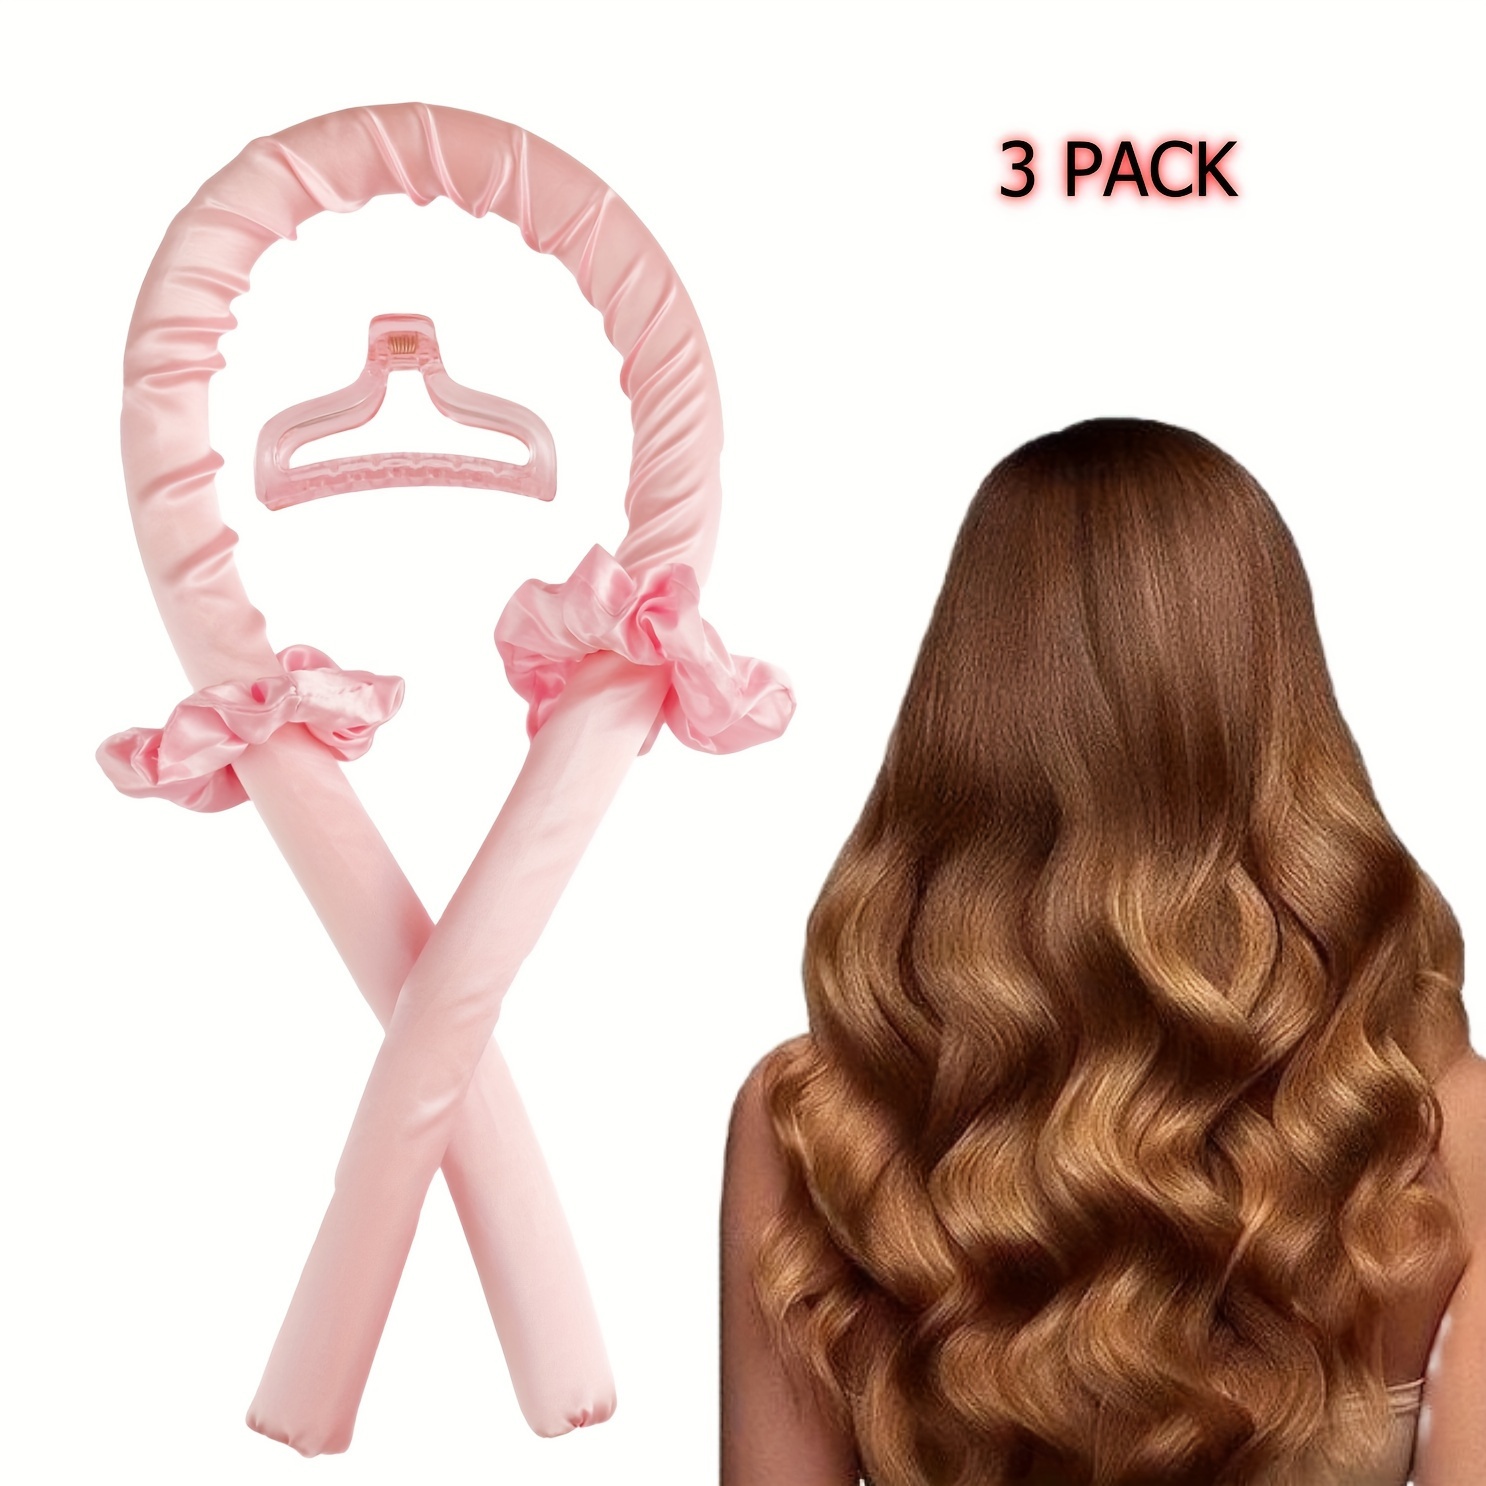 

3-pack Heatless Curls Headband Heatless Curling Ribbon Overnight Silky Satin Hair Curler Diy Hair Styling Tools